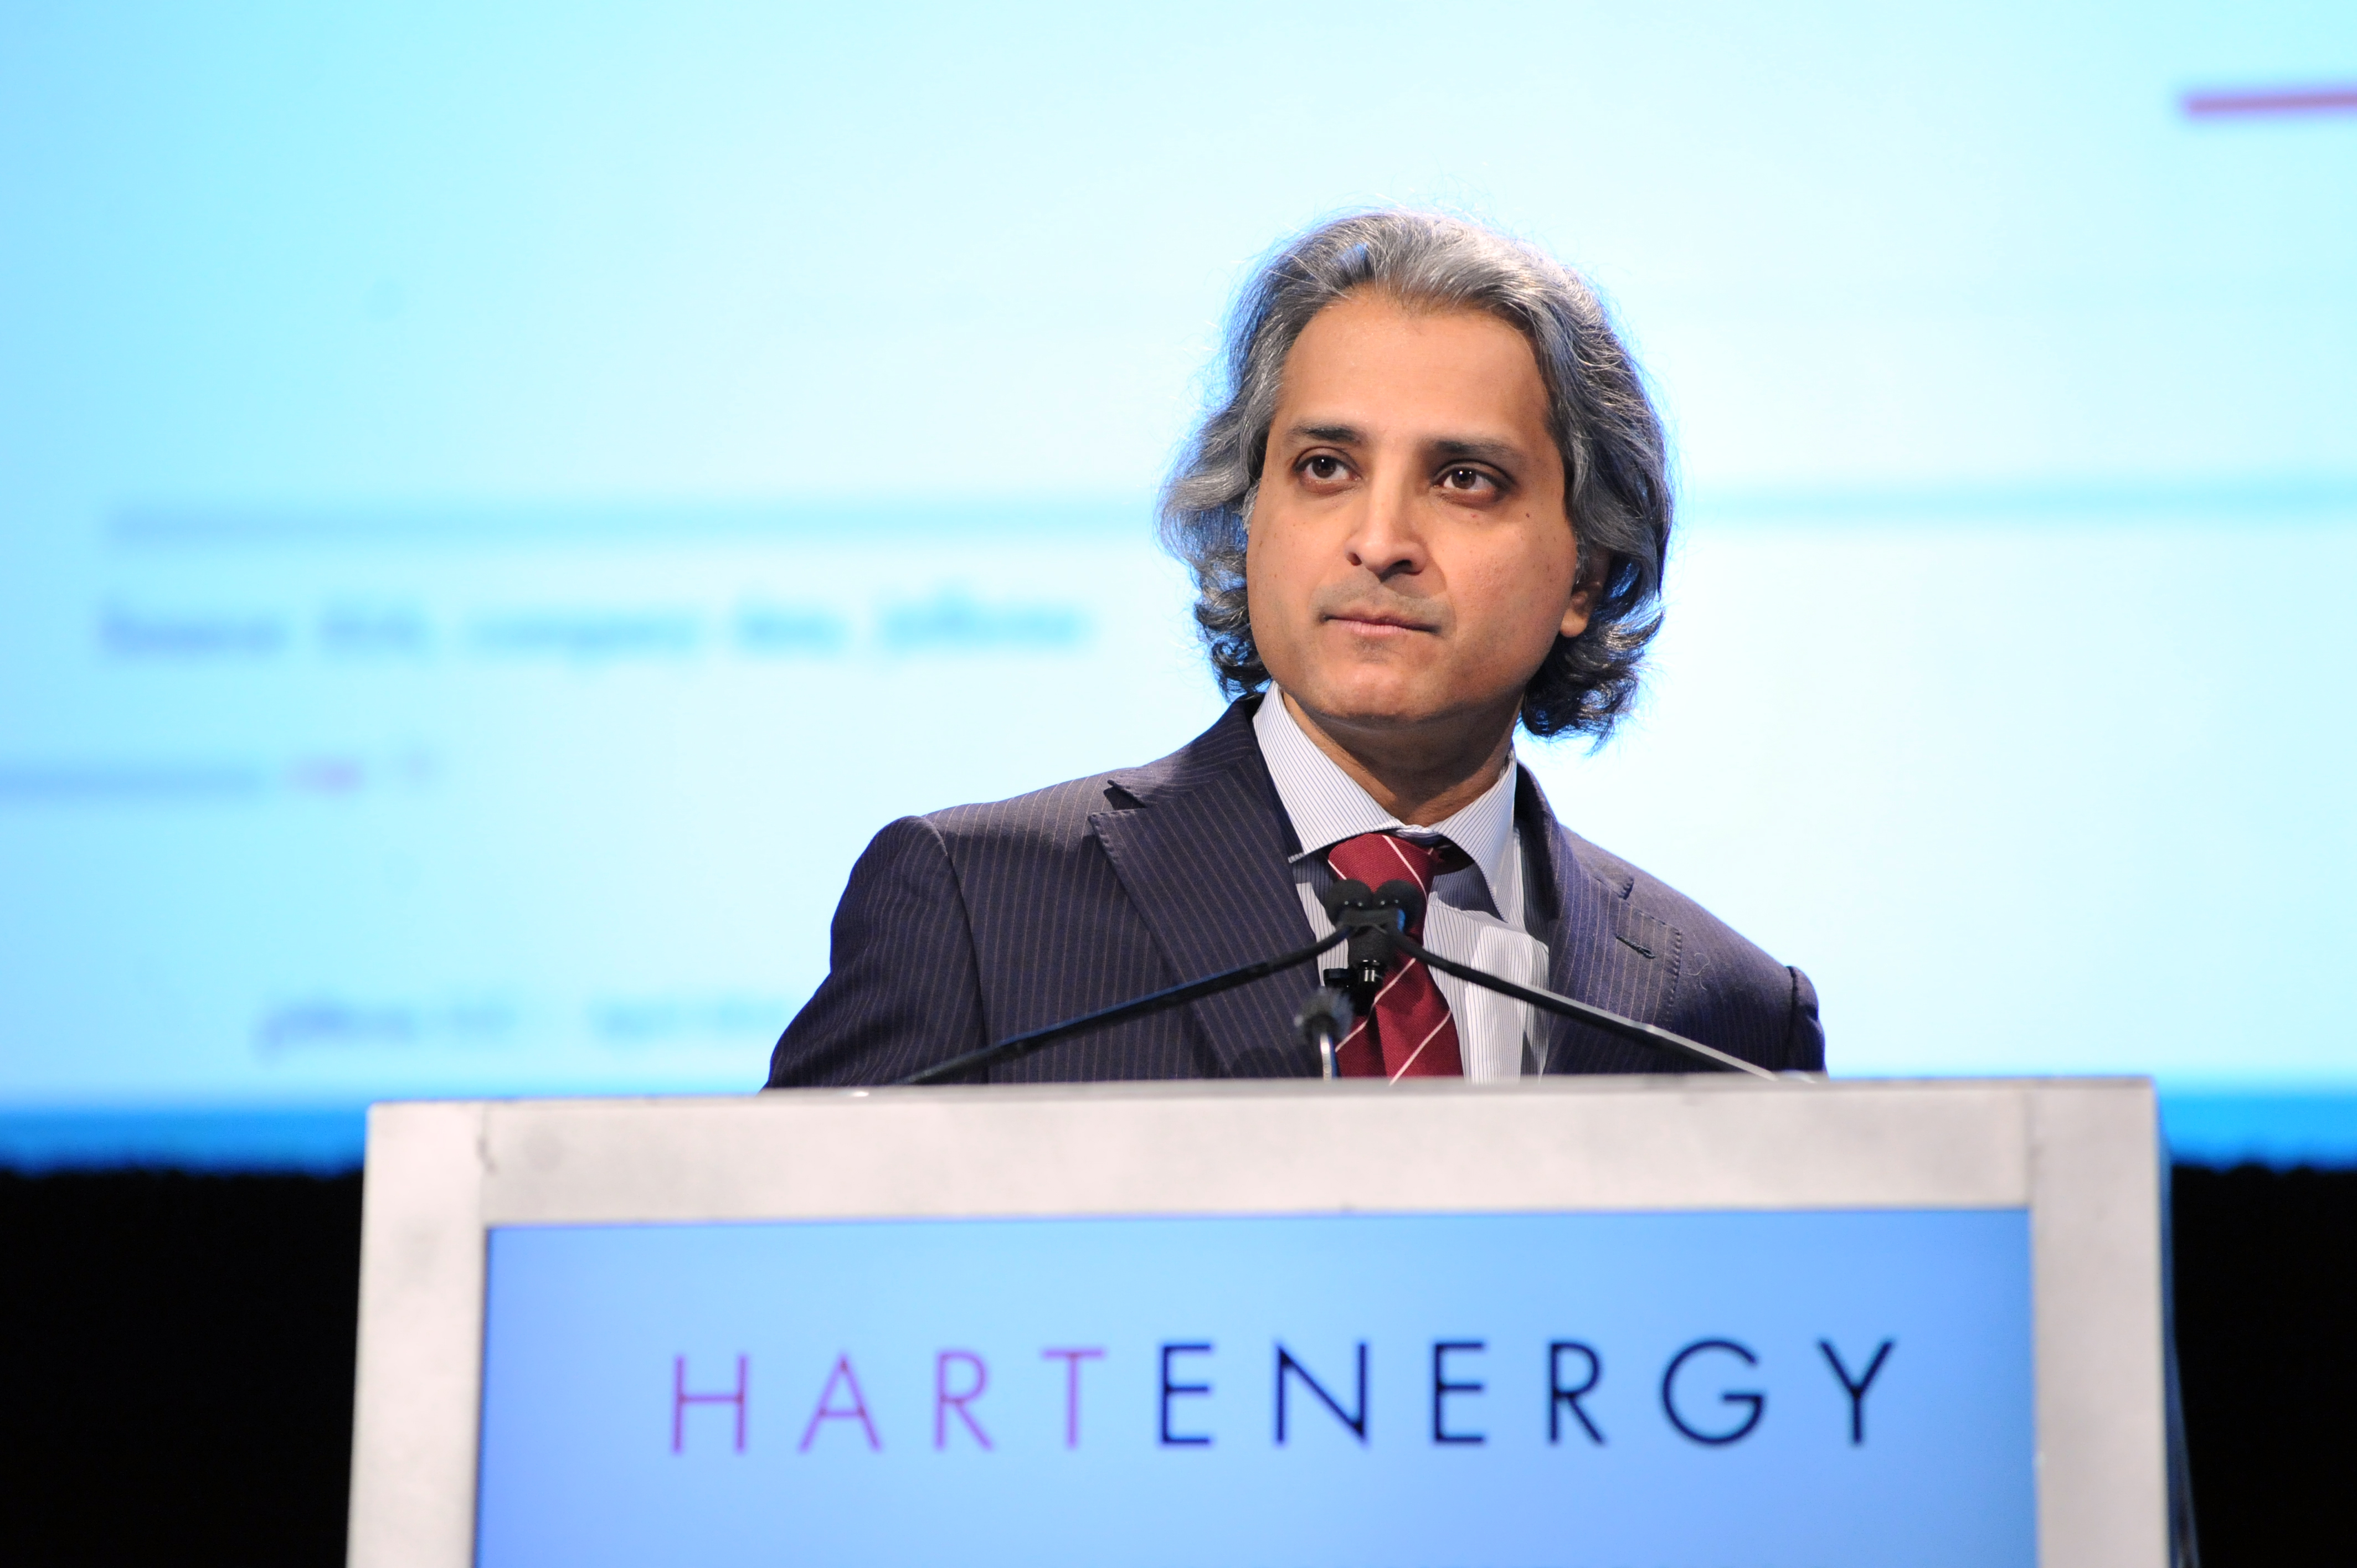 Subash Chandra, managing director of E&P at Guggenheim Securities